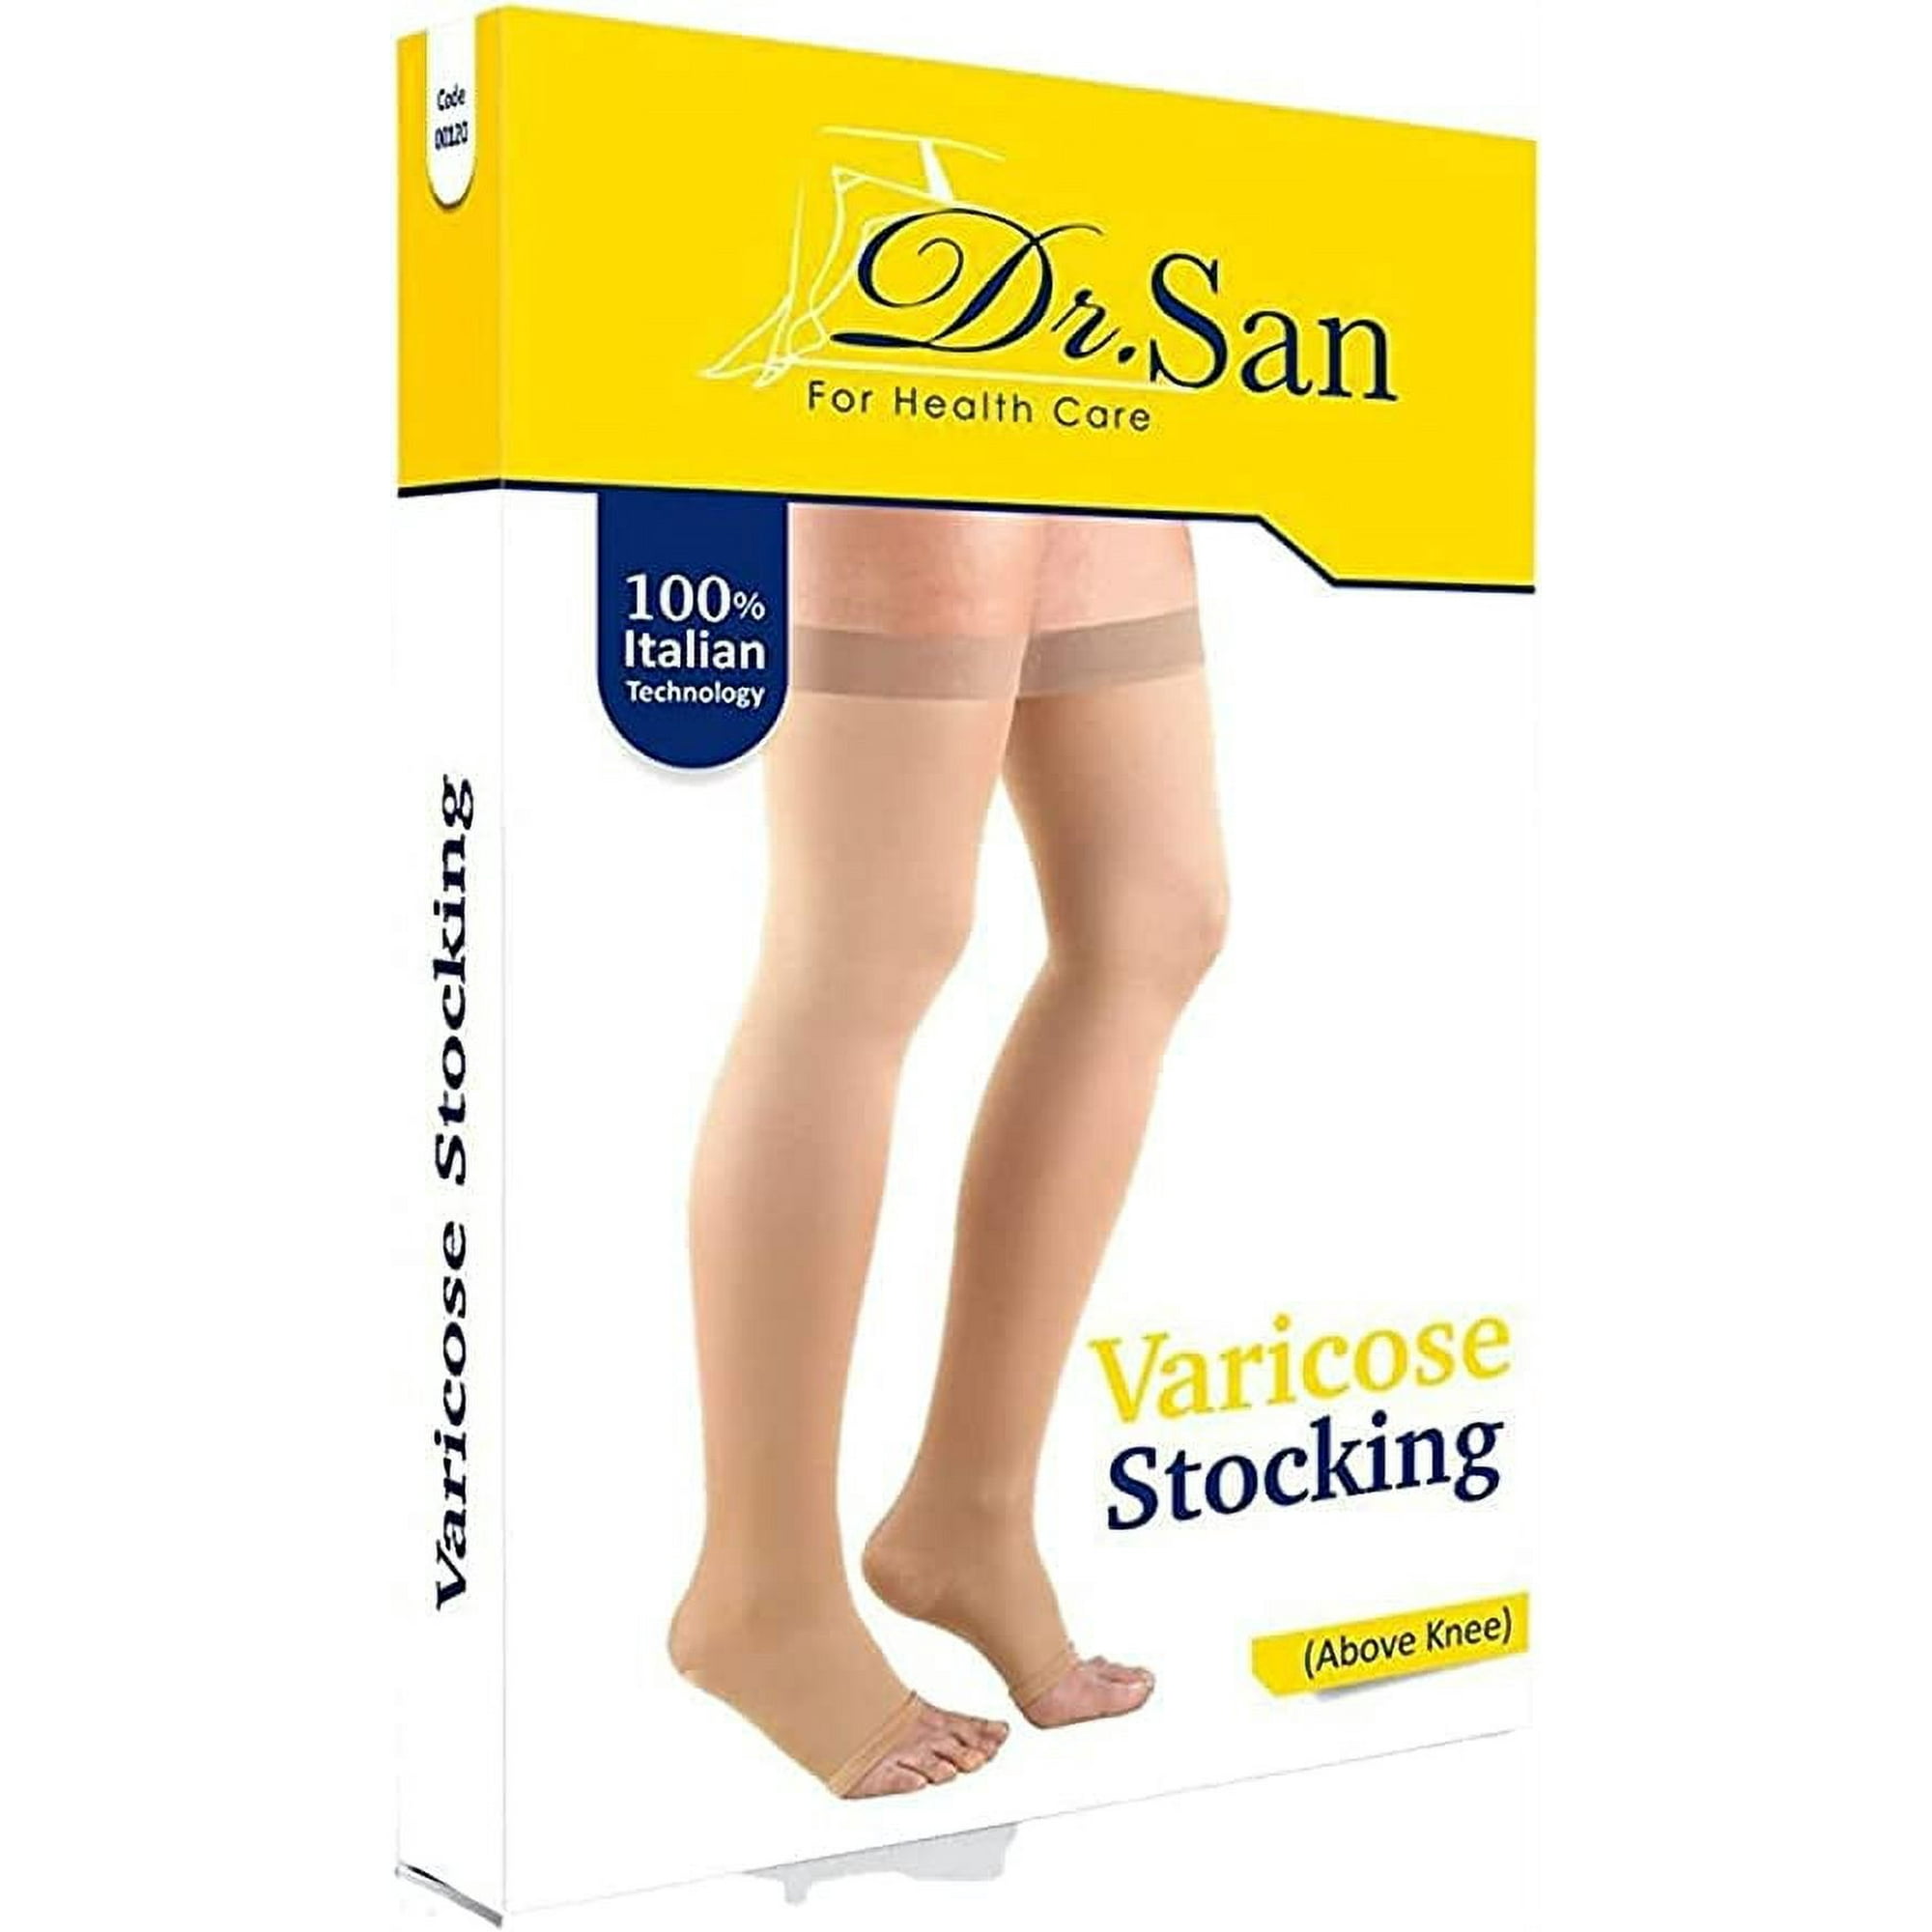 20-30 mmHg Compression Knee Sleeve Protector for Aching Knees, Shin Splint,  Varicose Vein (M)